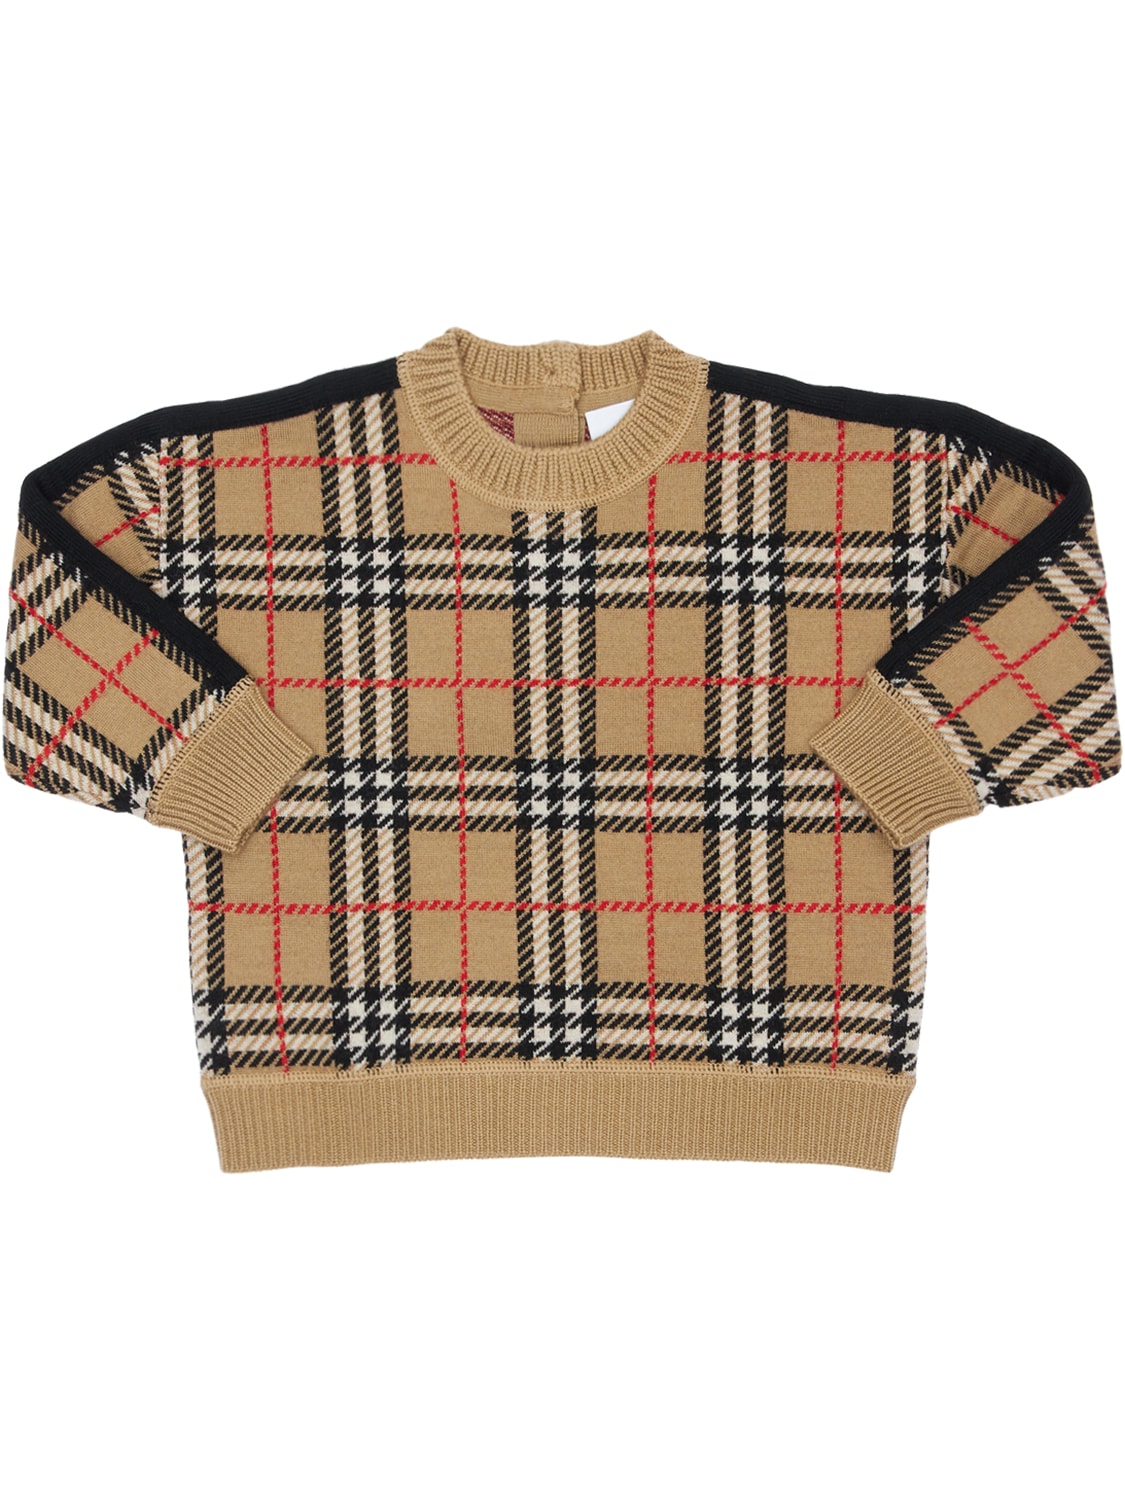 BURBERRY 格纹羊毛针织毛衣,72I1WL010-QTCWMJY1